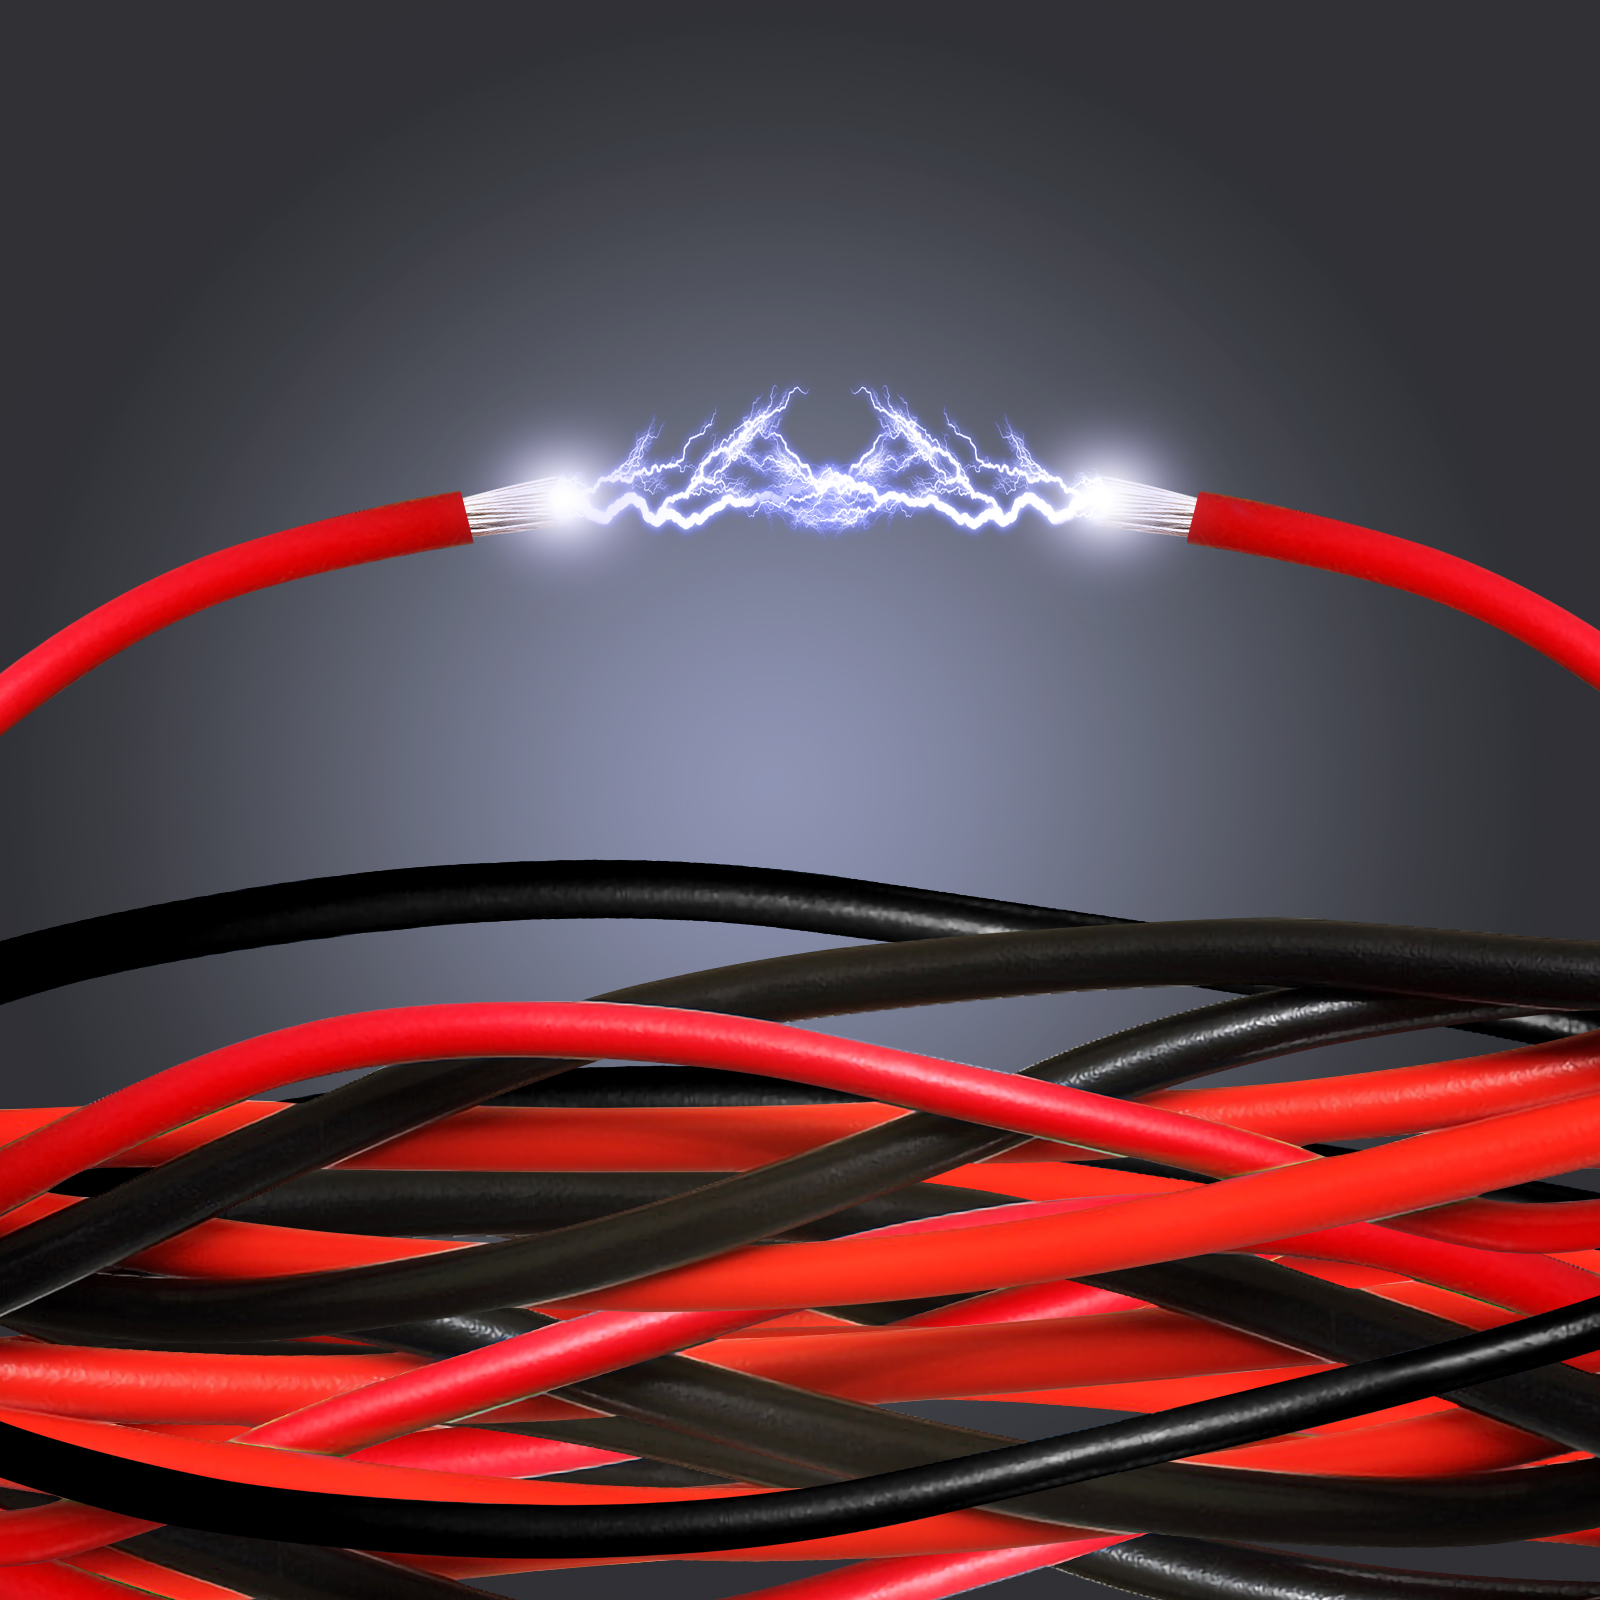 10-Gauge Red Low-Voltage RV GPT Primary Copper Wire - 35 ft.